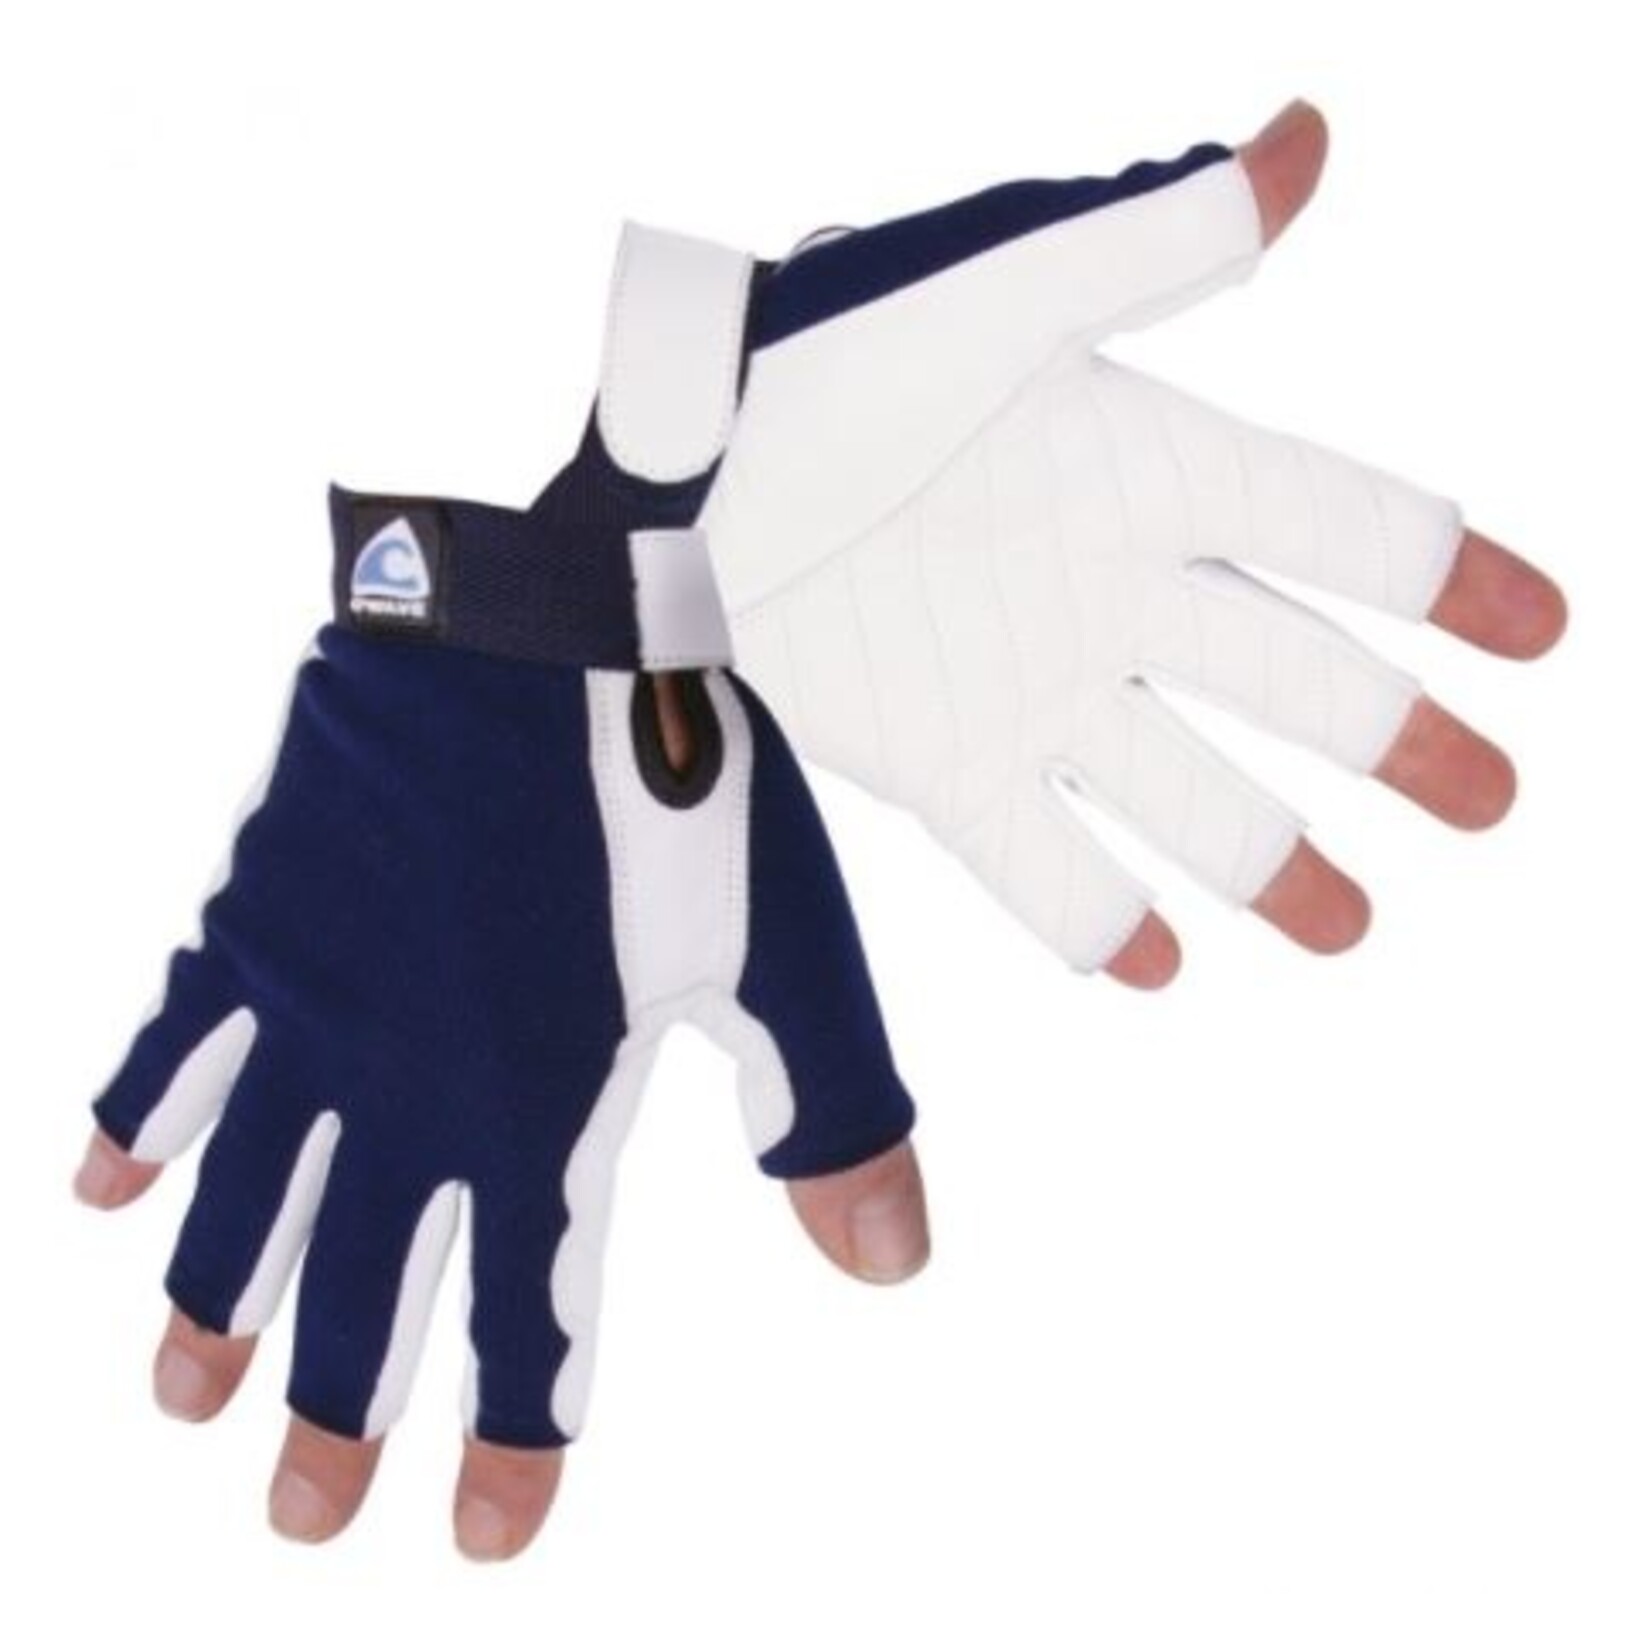 Plastimo O'wave gloves first+ 5dc xxl